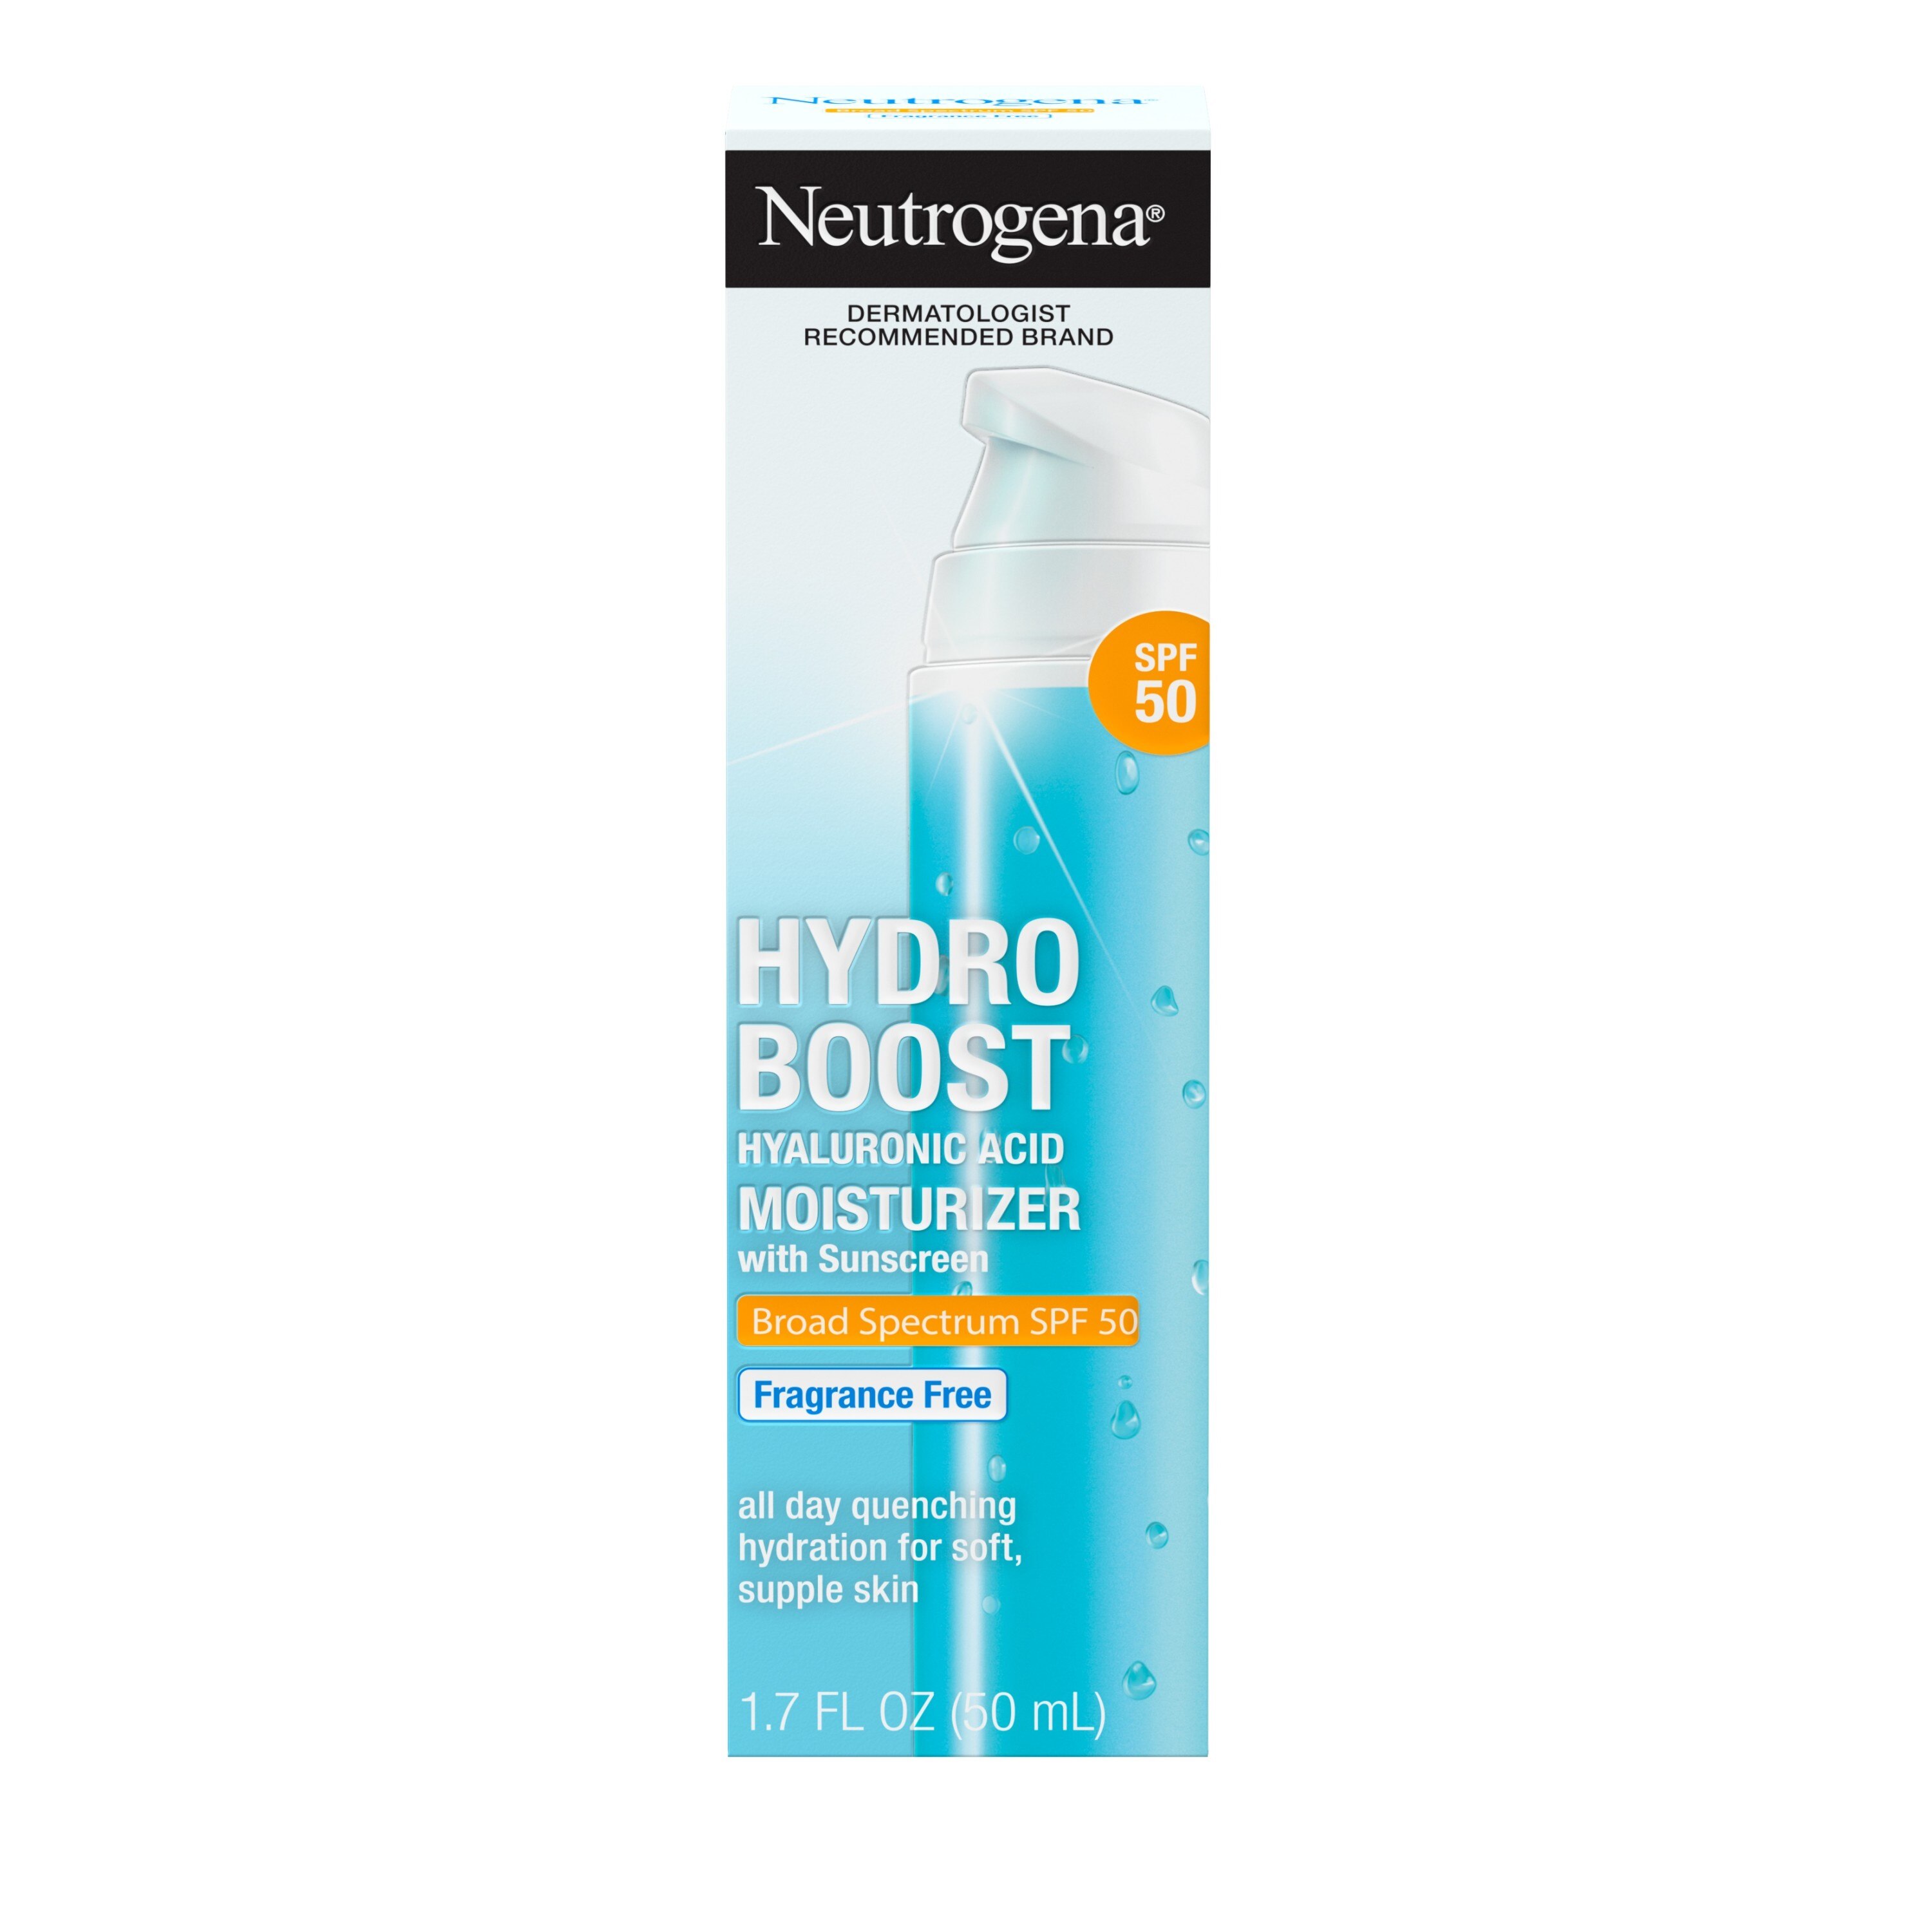 Neutrogena Hydro Boost SPF 50 Hyaluronic Acid Moisturizer, 1.7 OZ